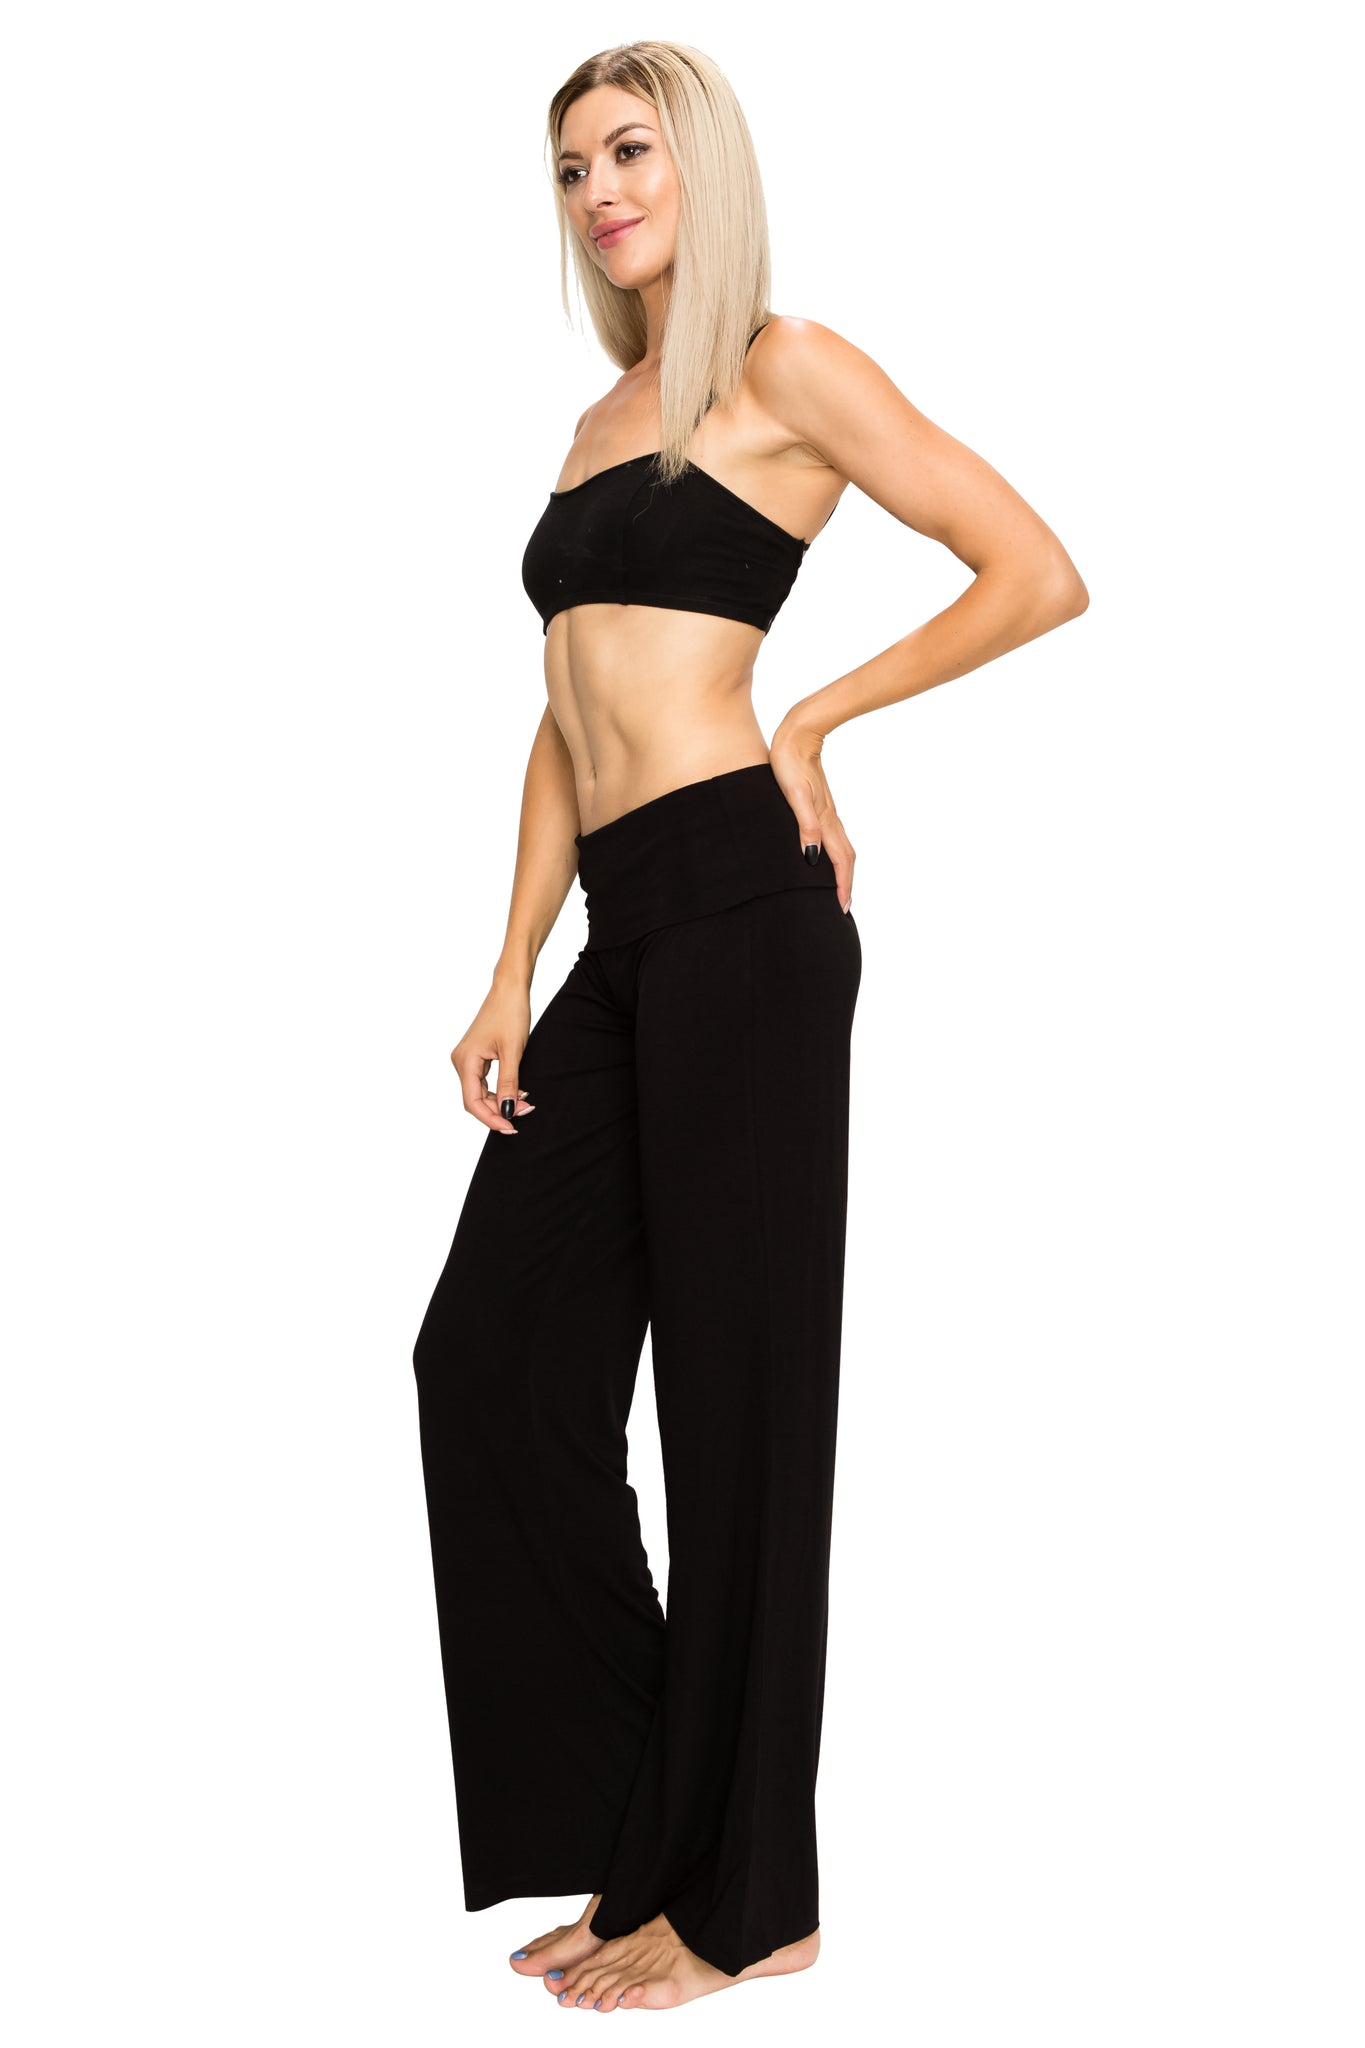 Black Foldover Yoga Pants - Poplooks